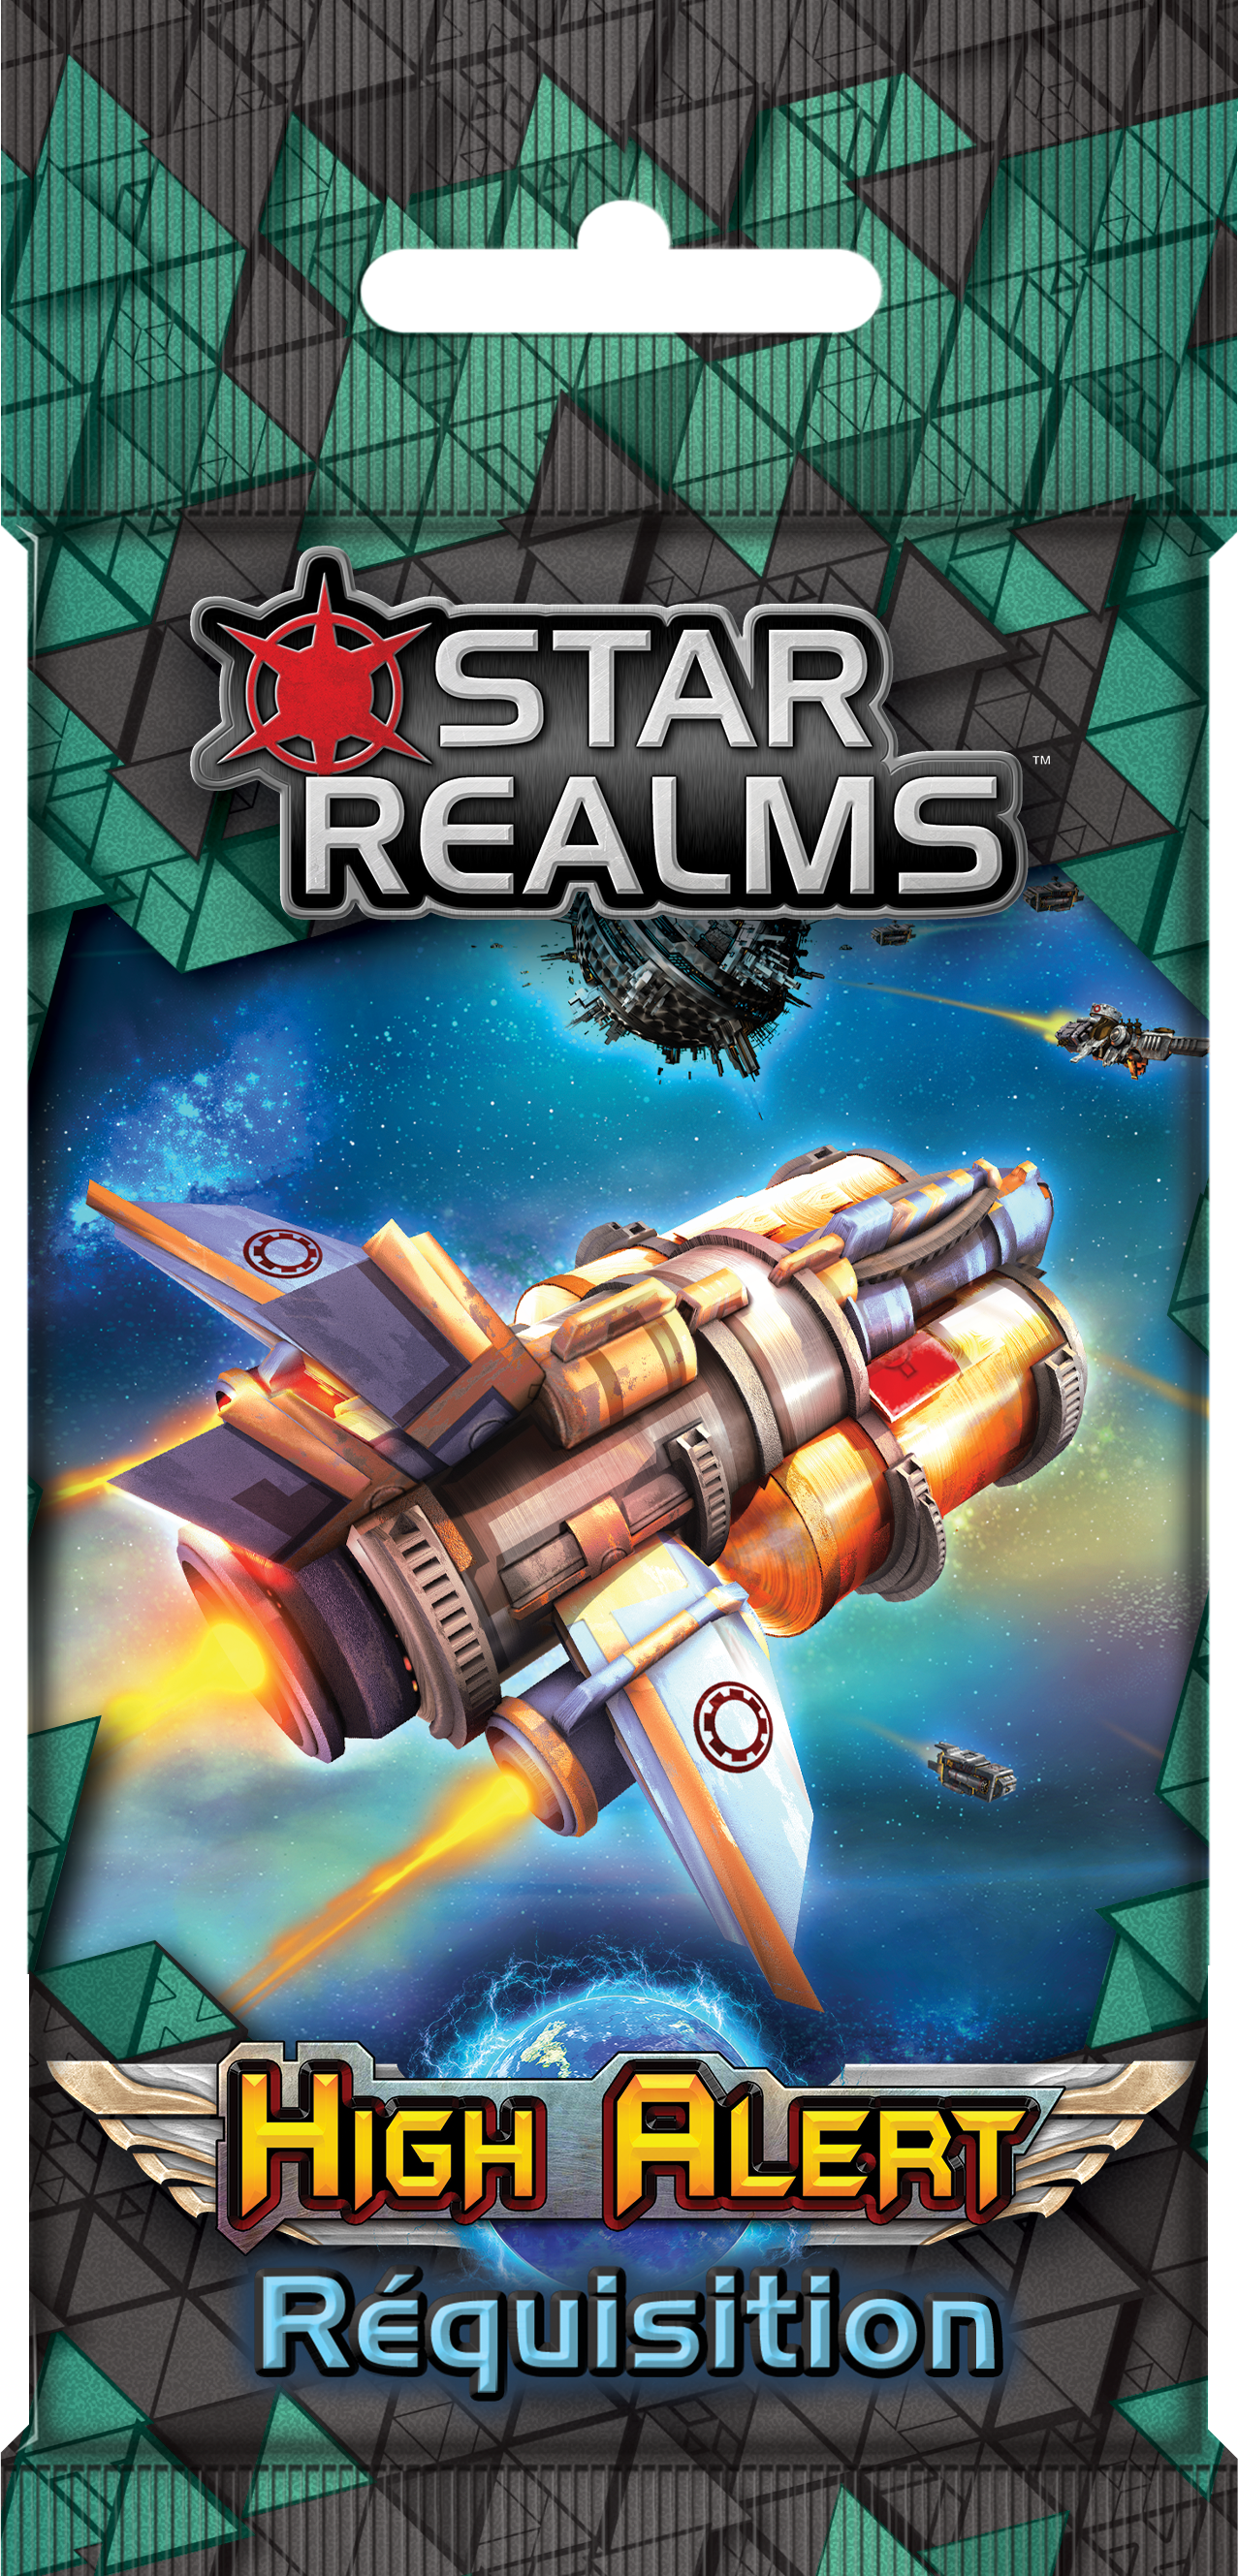 Star Realms - Extension United : Héros